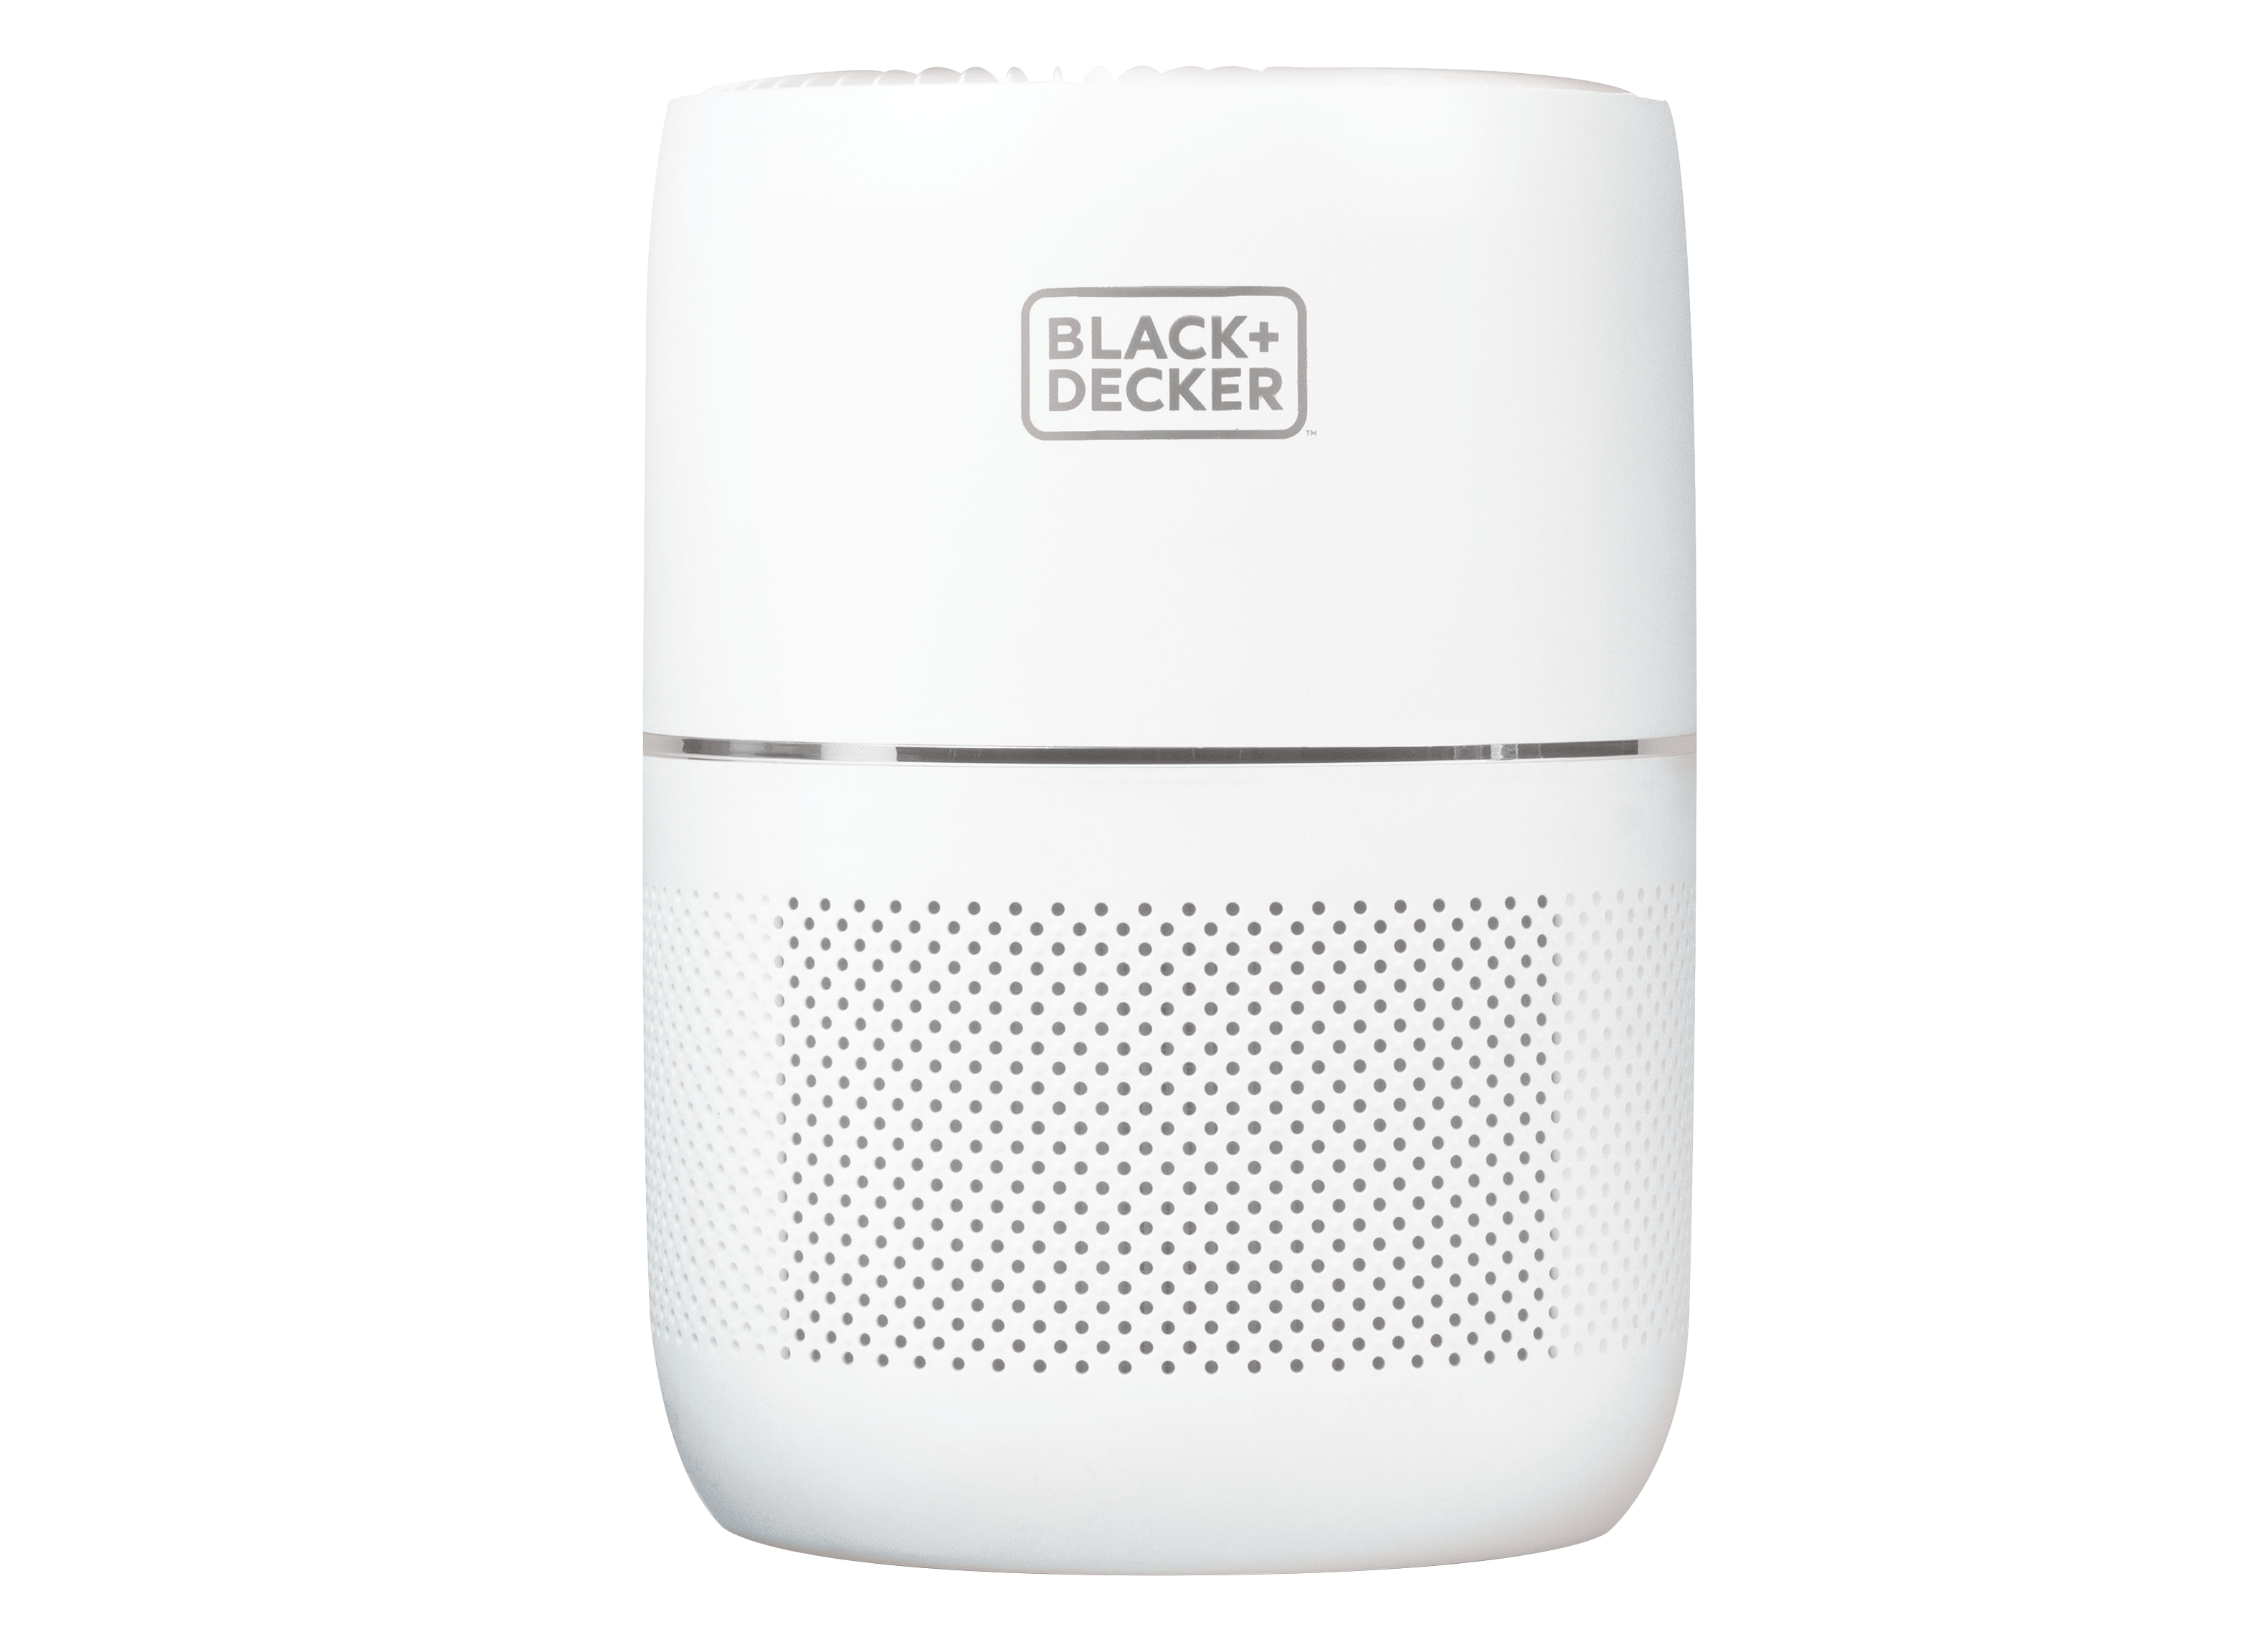 Black+Decker BAPT02 Air Purifier Review - Consumer Reports